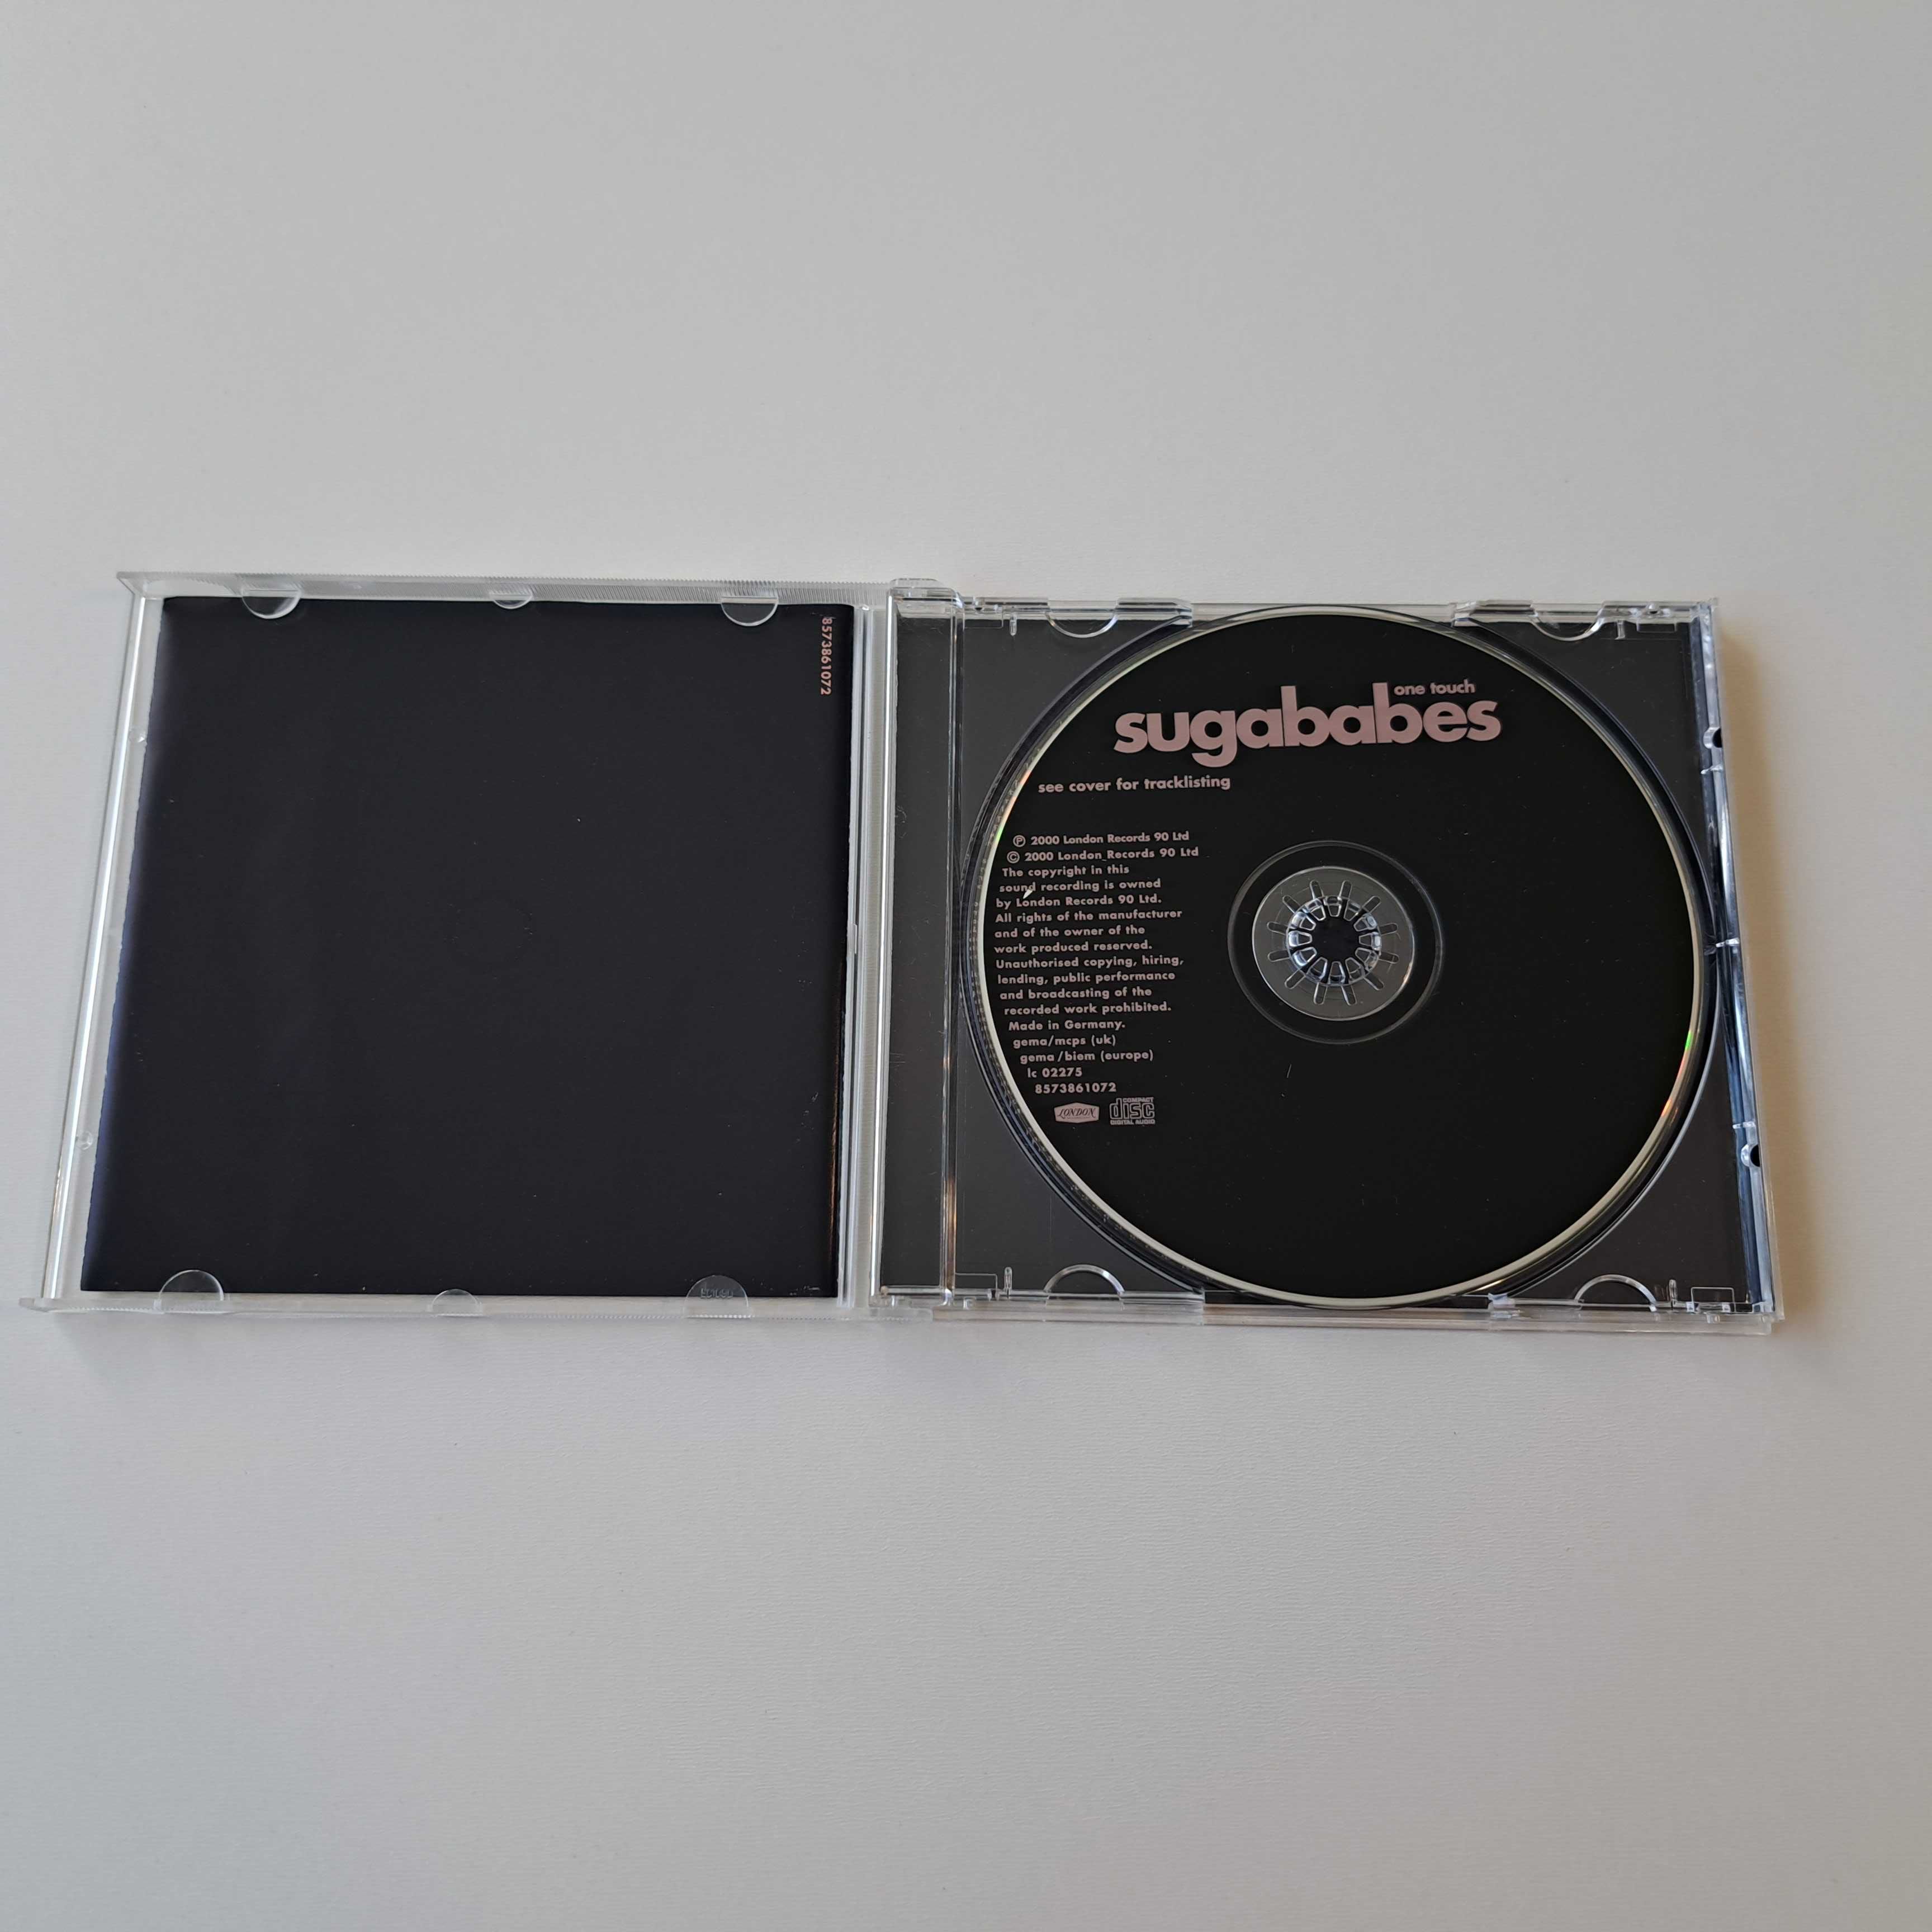 Płyta Sugababes - One touch  nr332